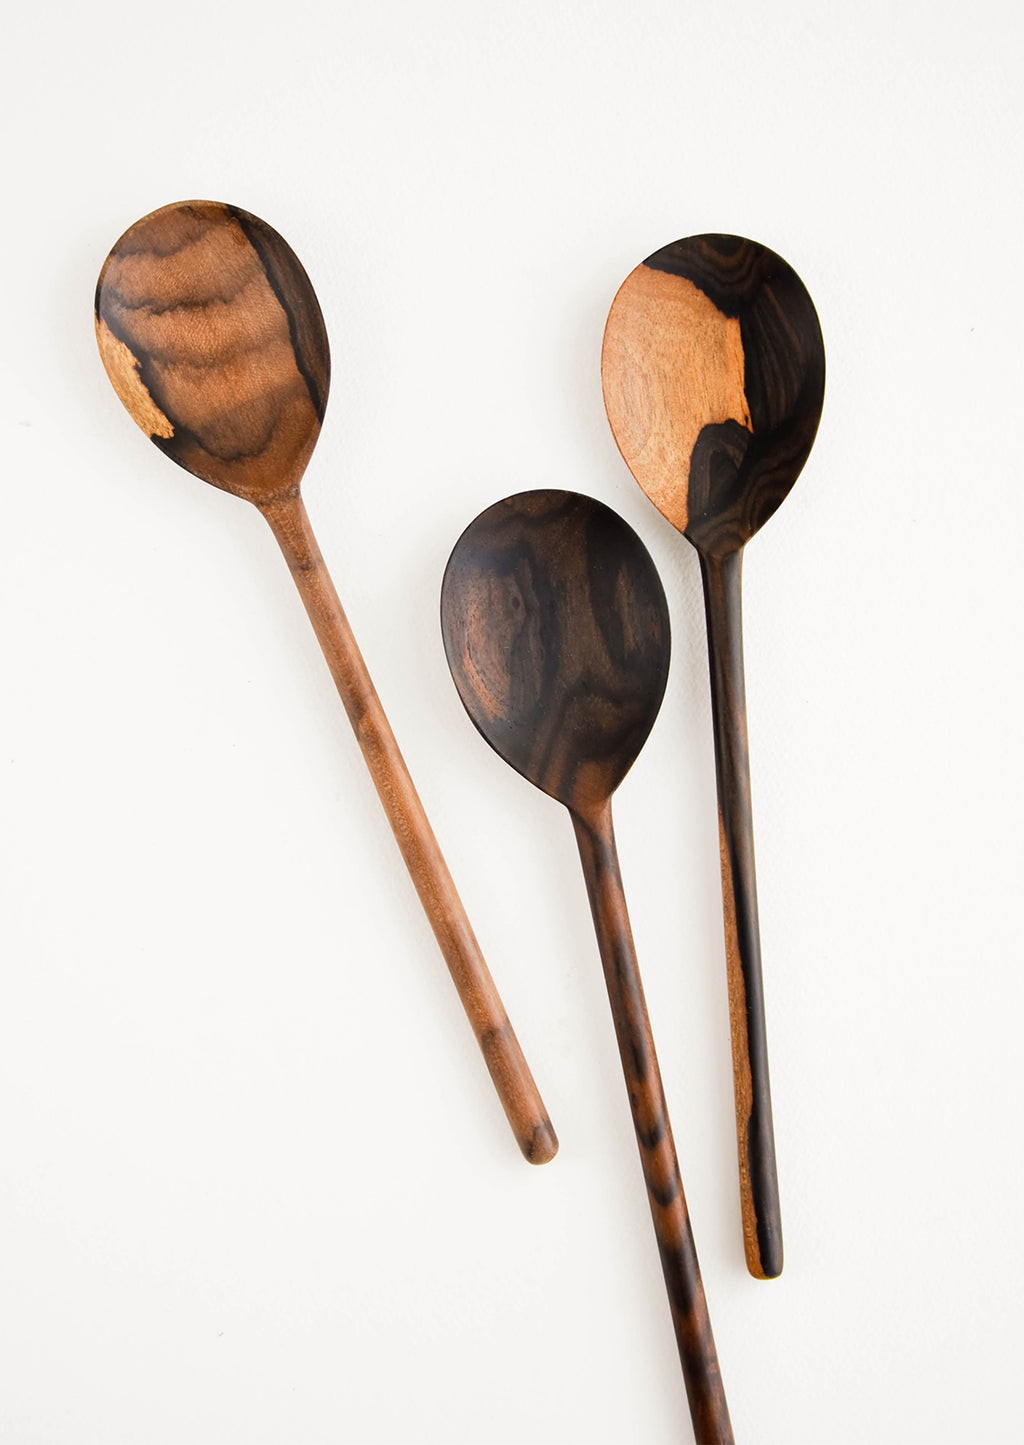 Medium Oval / Dark: Peten Wooden Spoon in Medium Oval / Dark - LEIF